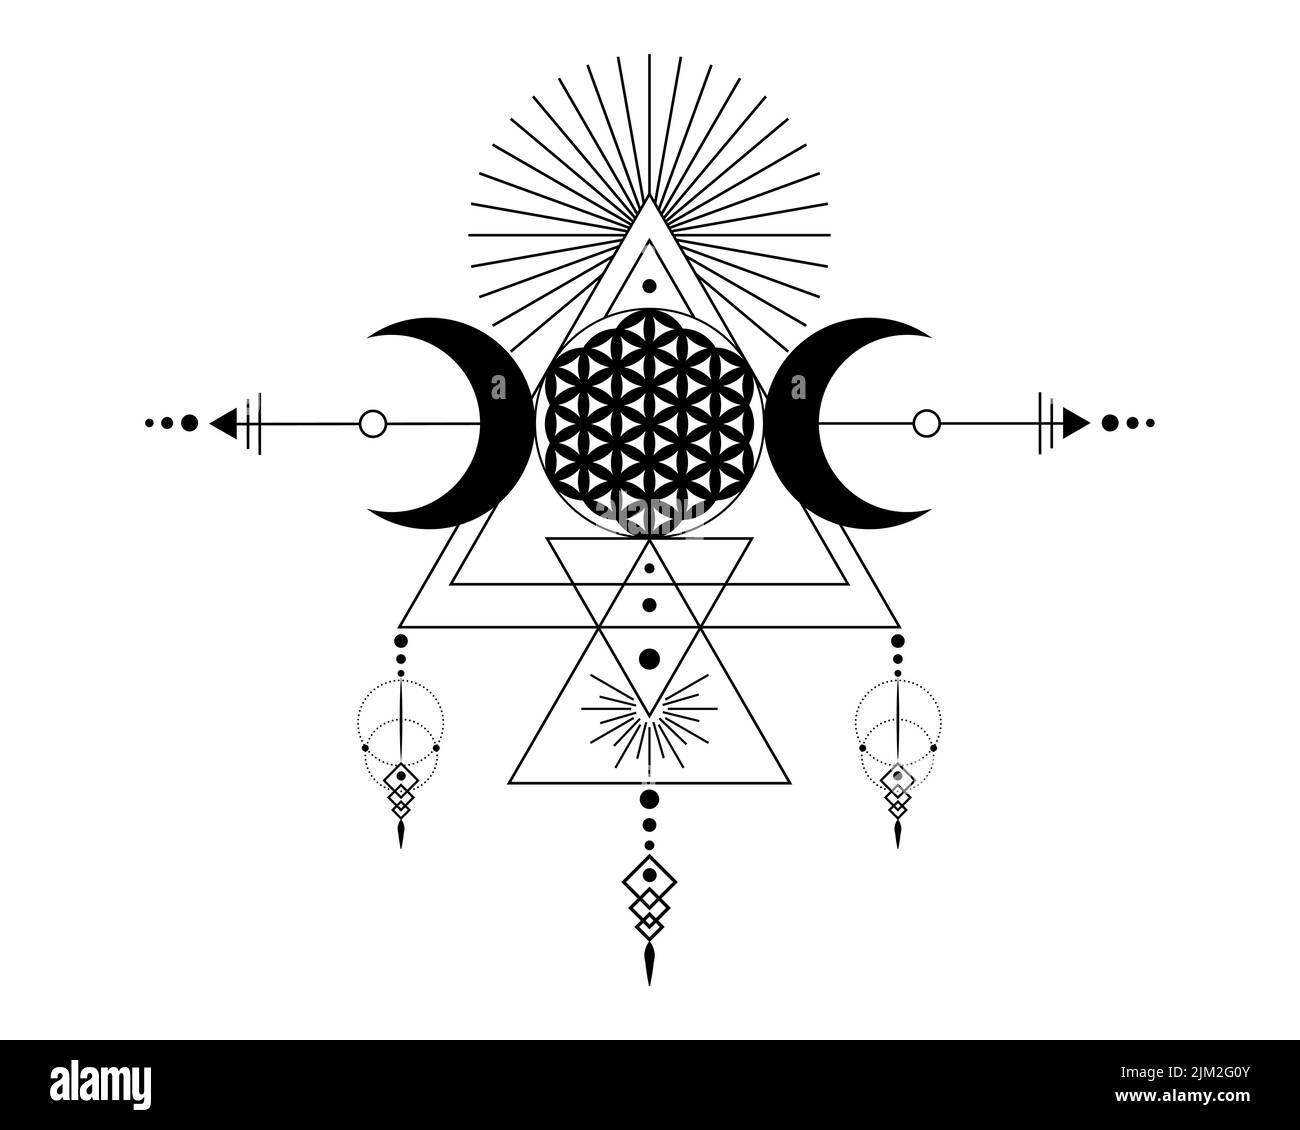 Triple Goddess and Flower of Life, Heilige Geometrie, Tribal Triangles, Mondphasen im Shaman Boho Stil. Tattoo, Astrologie, Alchemie und magische Symbole. Stock Vektor